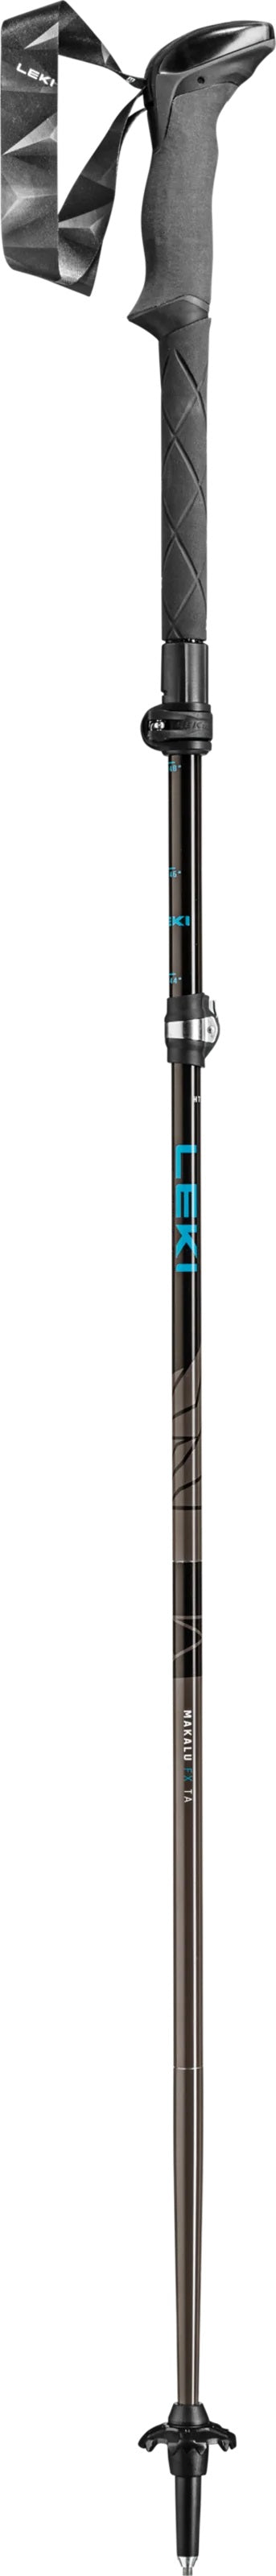 Leki MAKALU FX TA Trekkingstöcke petrol-black-silvergray (110-130 cm) Unisex